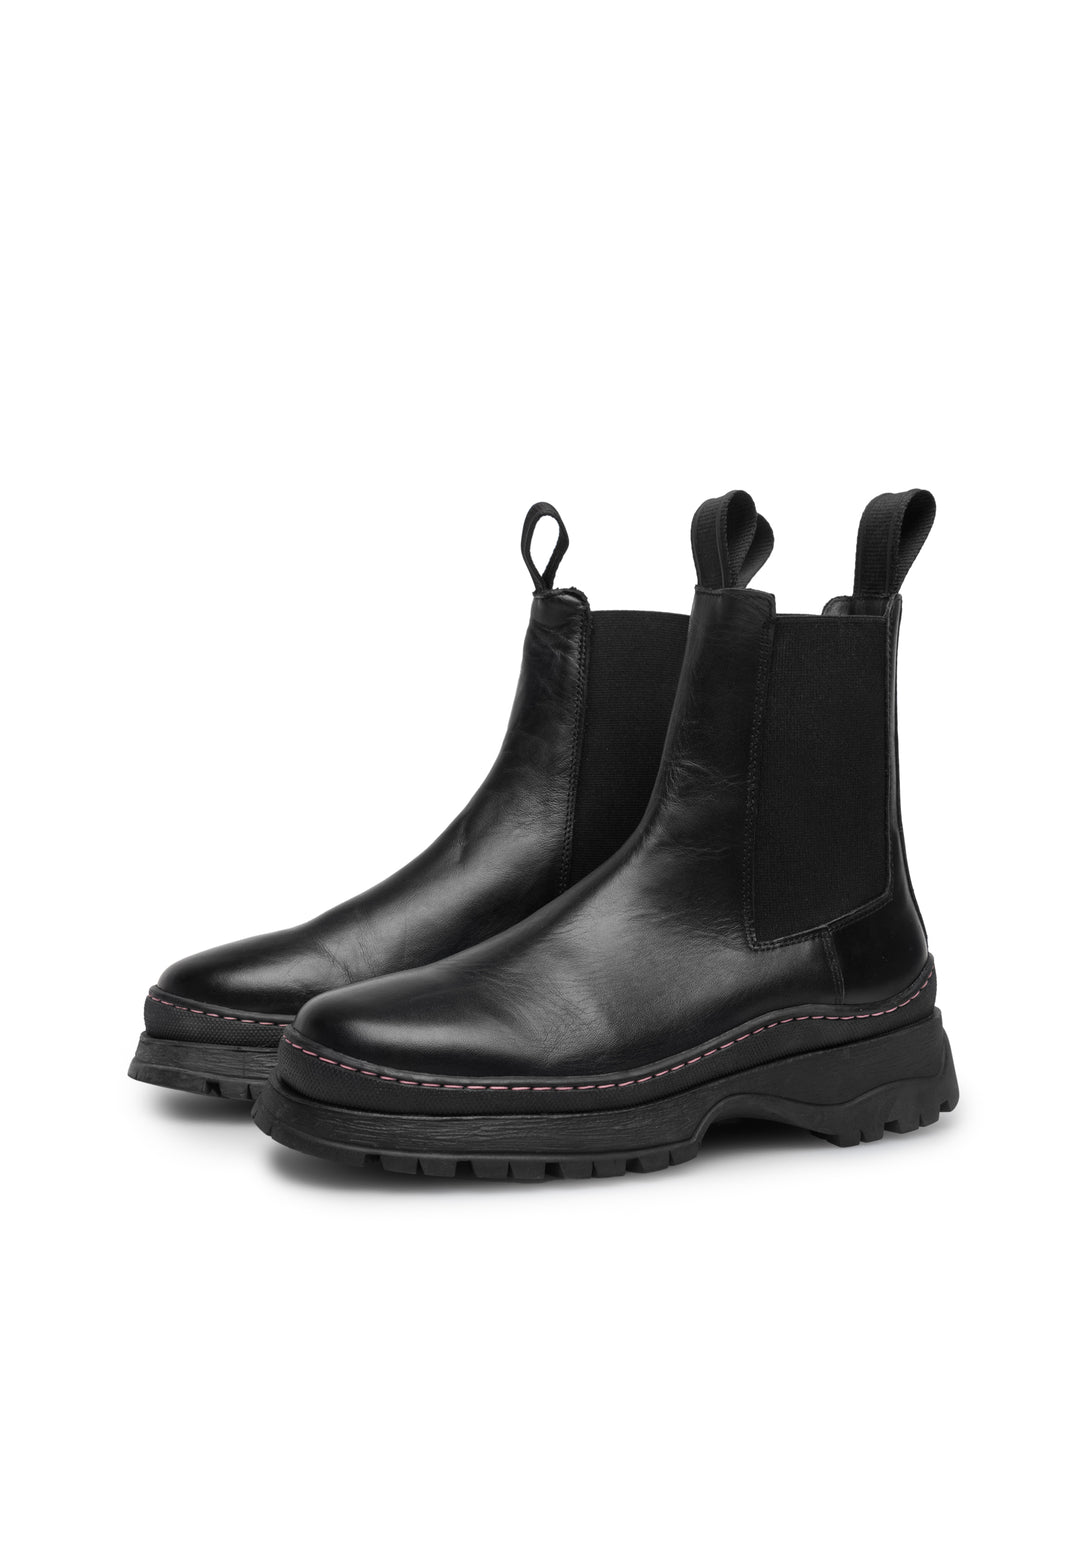 LÄST Powder Chelsea - Leather - Black Ankle Boots Black